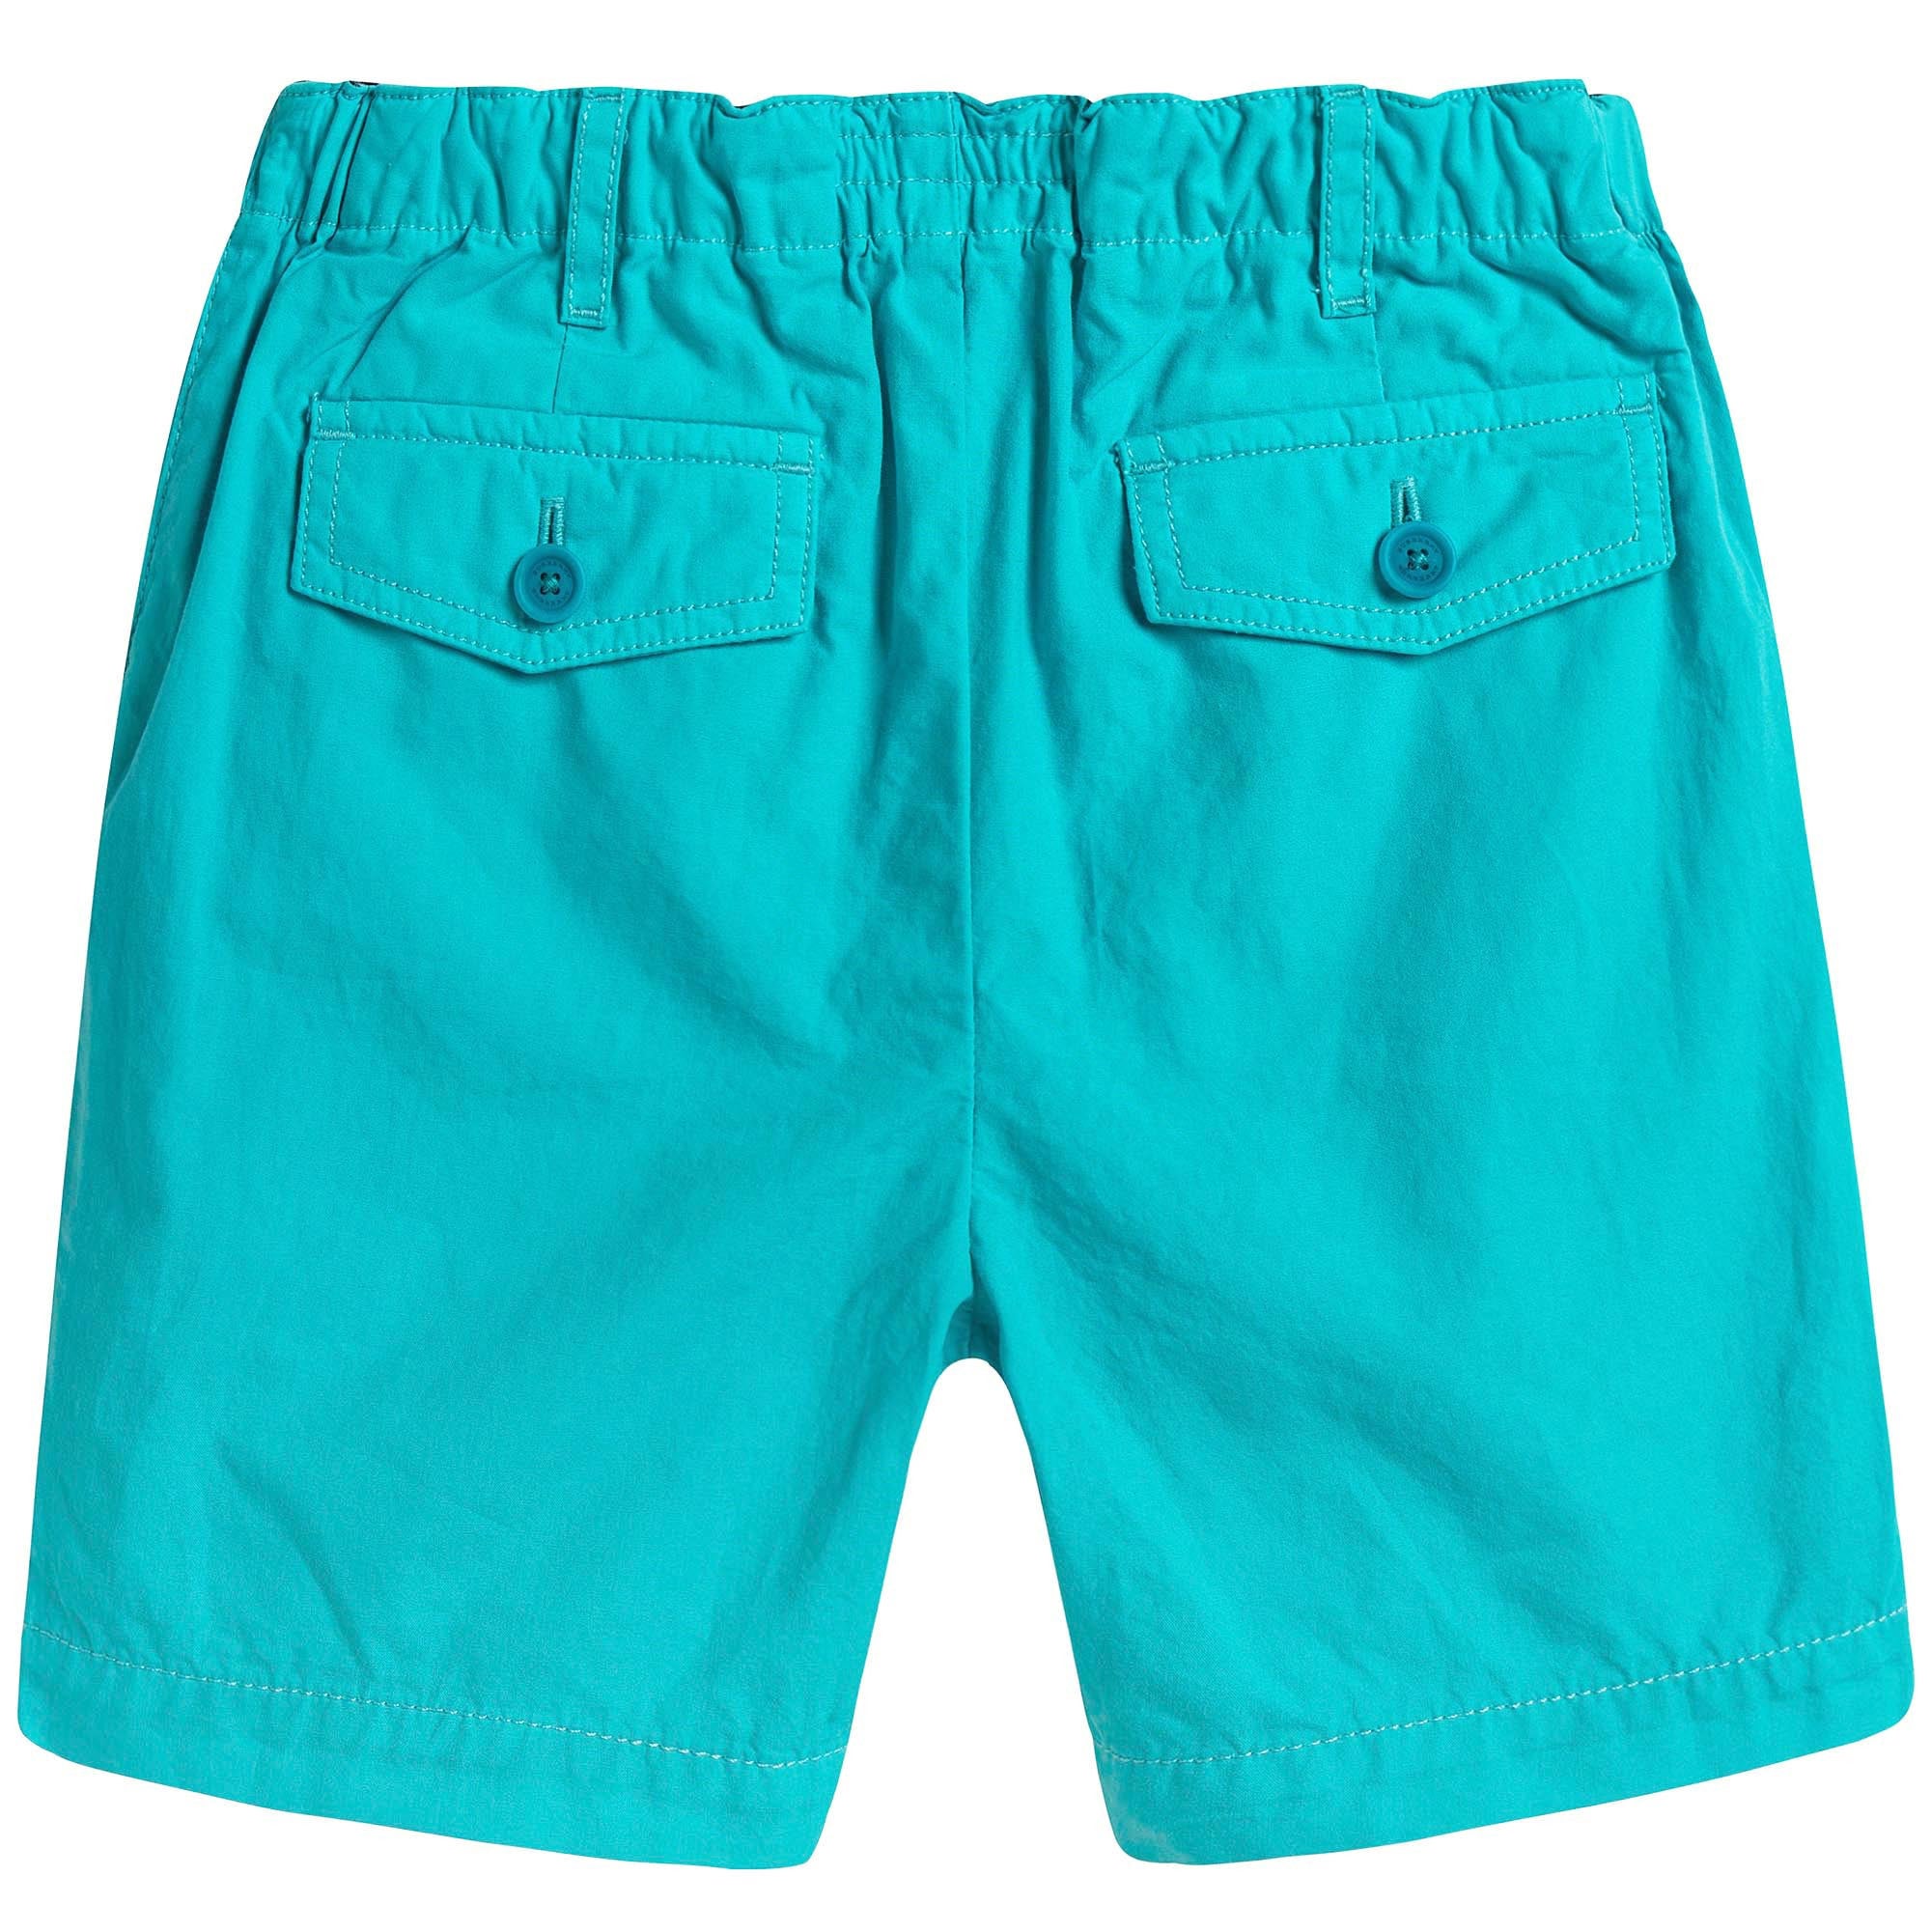 Baby Boys Turquoise Blue Cotton Shorts